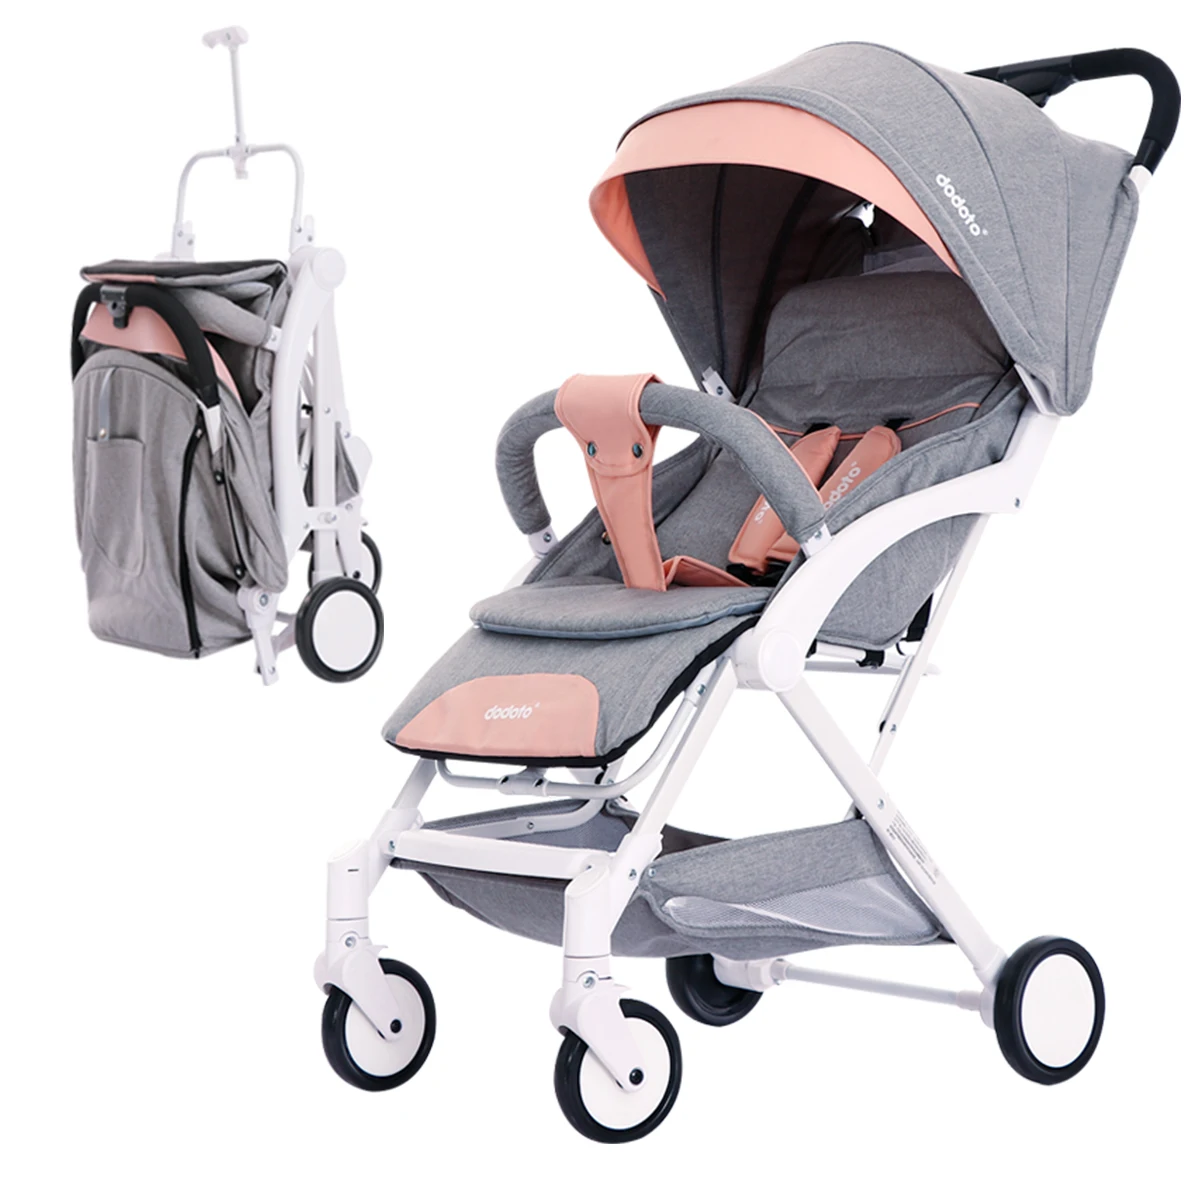 5.8kg Adjustable Luxury Baby Stroller 3 in 1 Portable High Landscape Luxury Stroller Hot Mom Pink Stroller Travel Pram Pushchair enlarge